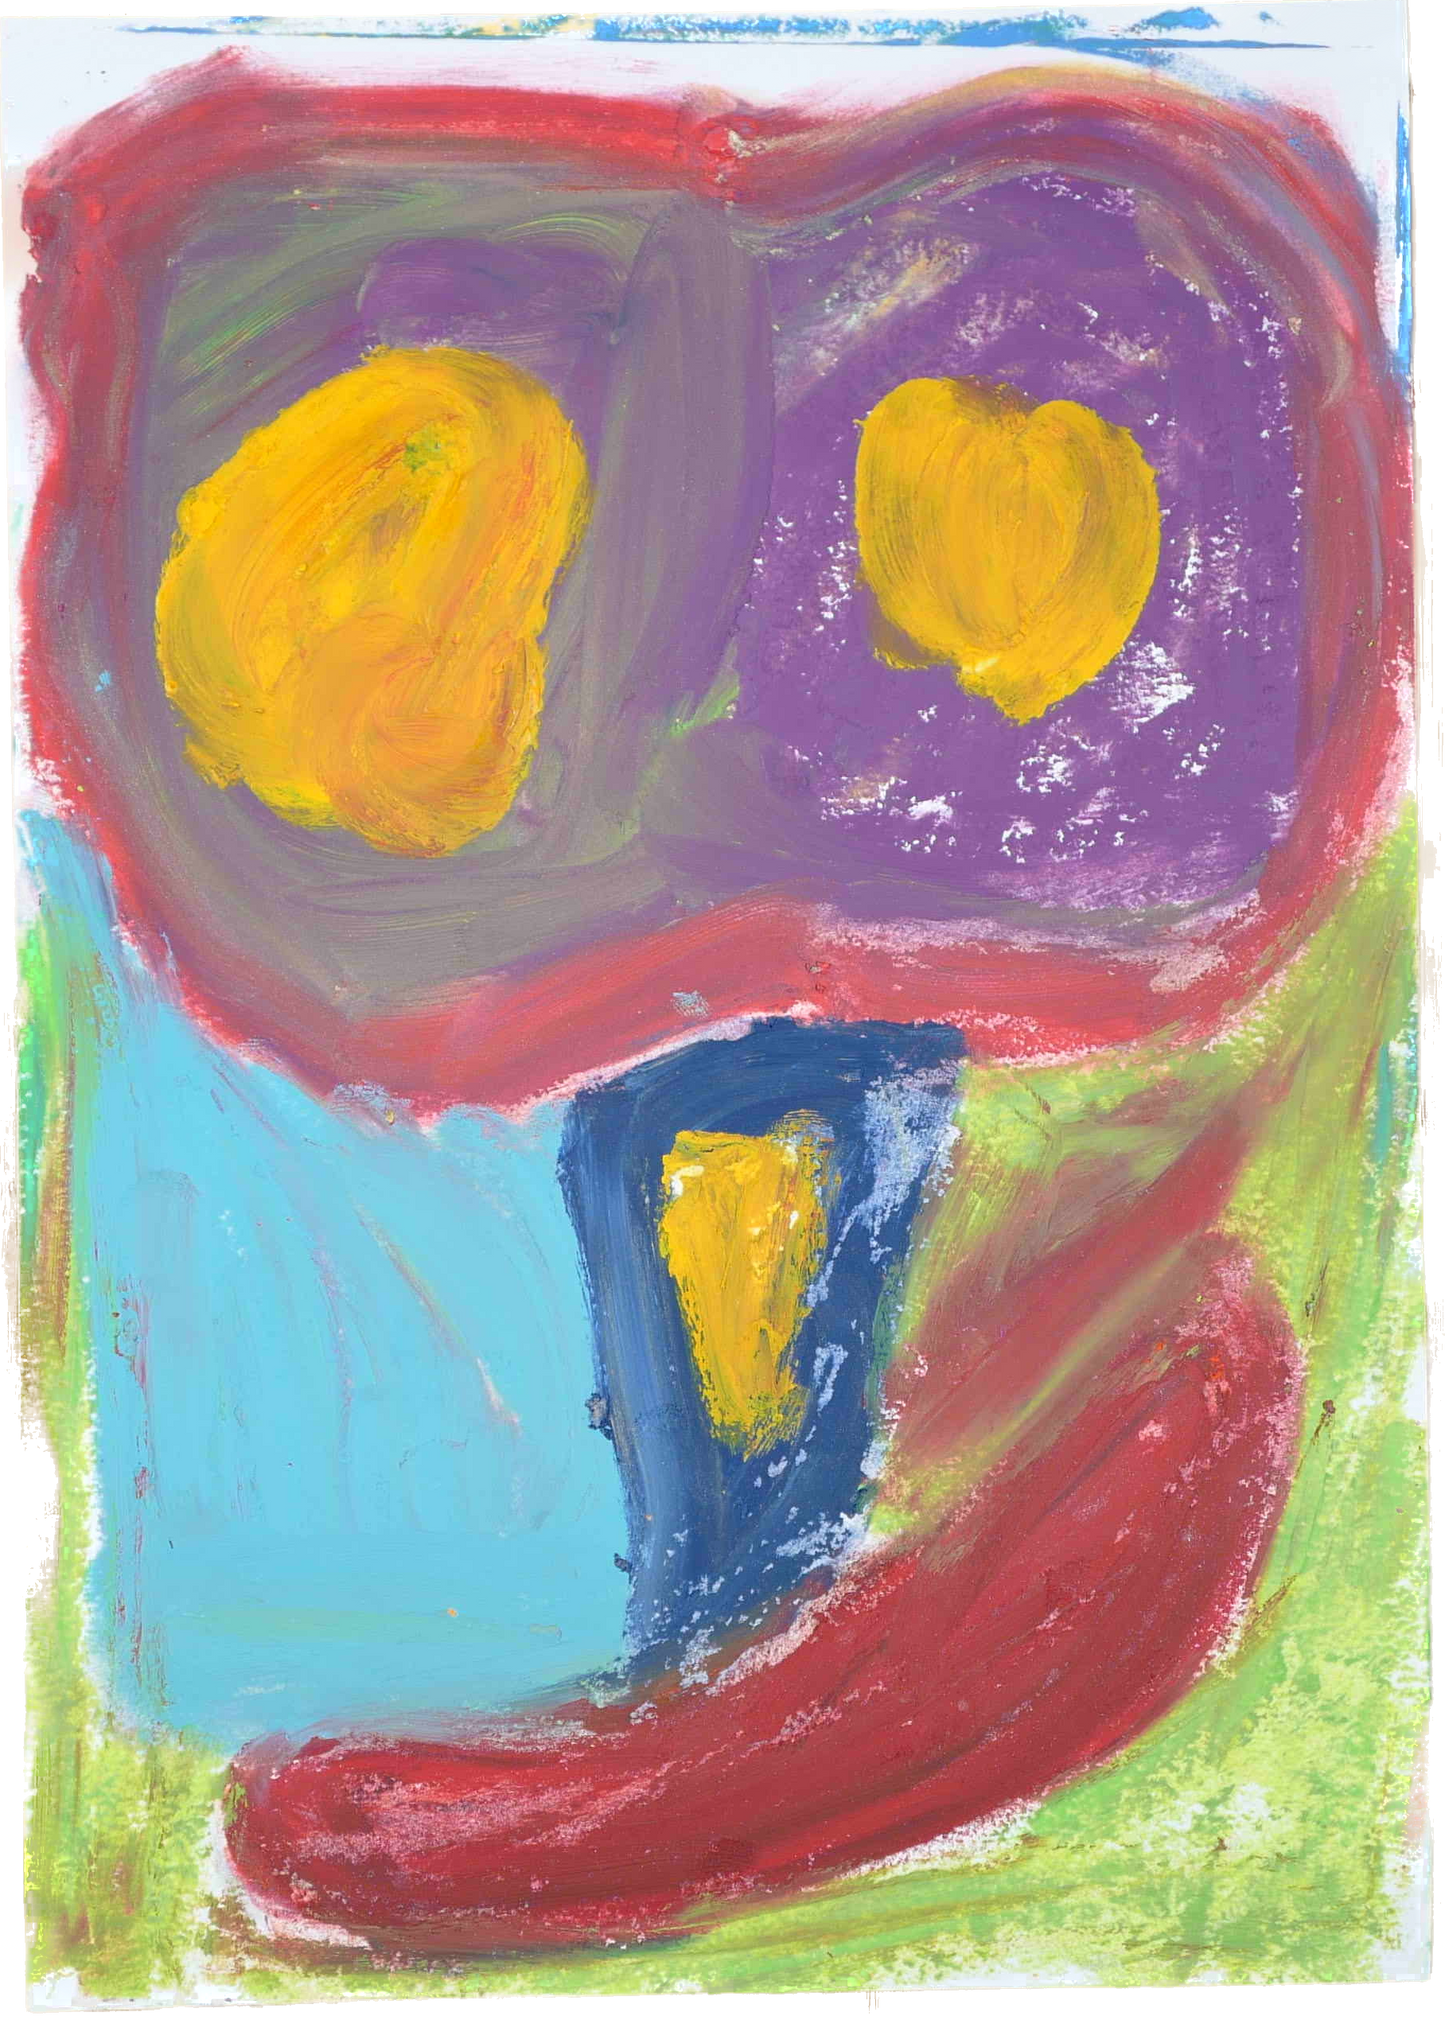 "Lenfantvivant abstract oil pastel No. 179" "Colorful symphony of abstract art No. 179" "Vibrant Sauna Fusion Art by Lenfantvivant" "Modern abstract expression oil pastel artwork" "Dynamic color interplay in Lenfantvivant art No. 179"